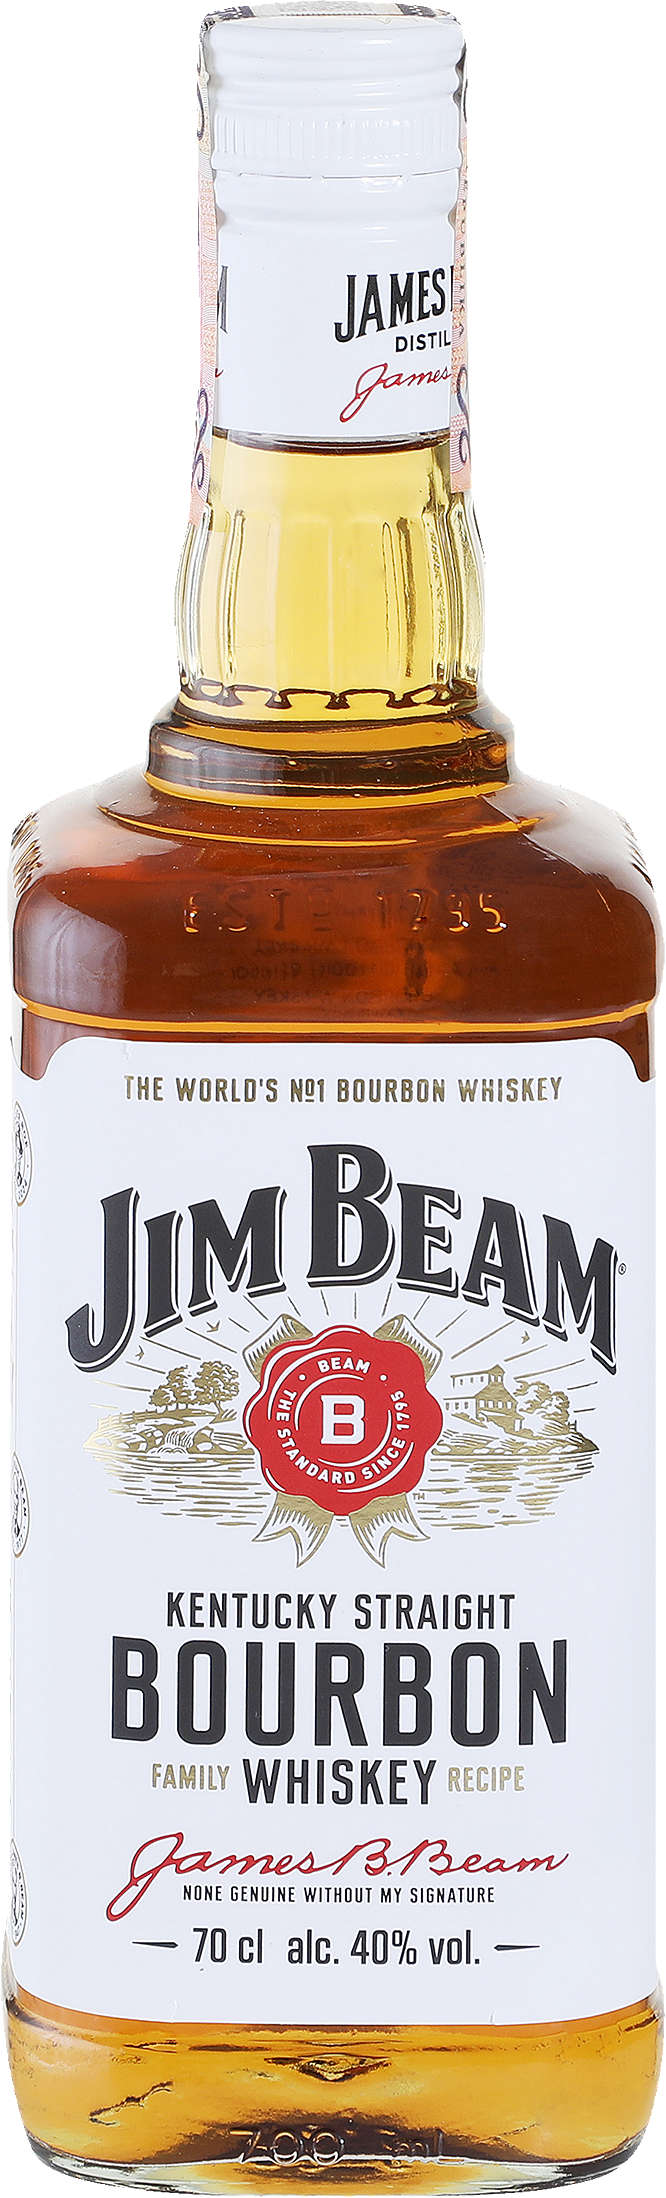 Zobrazenie výrobku Jim Beam Bourbon whiskey Kentucky straight